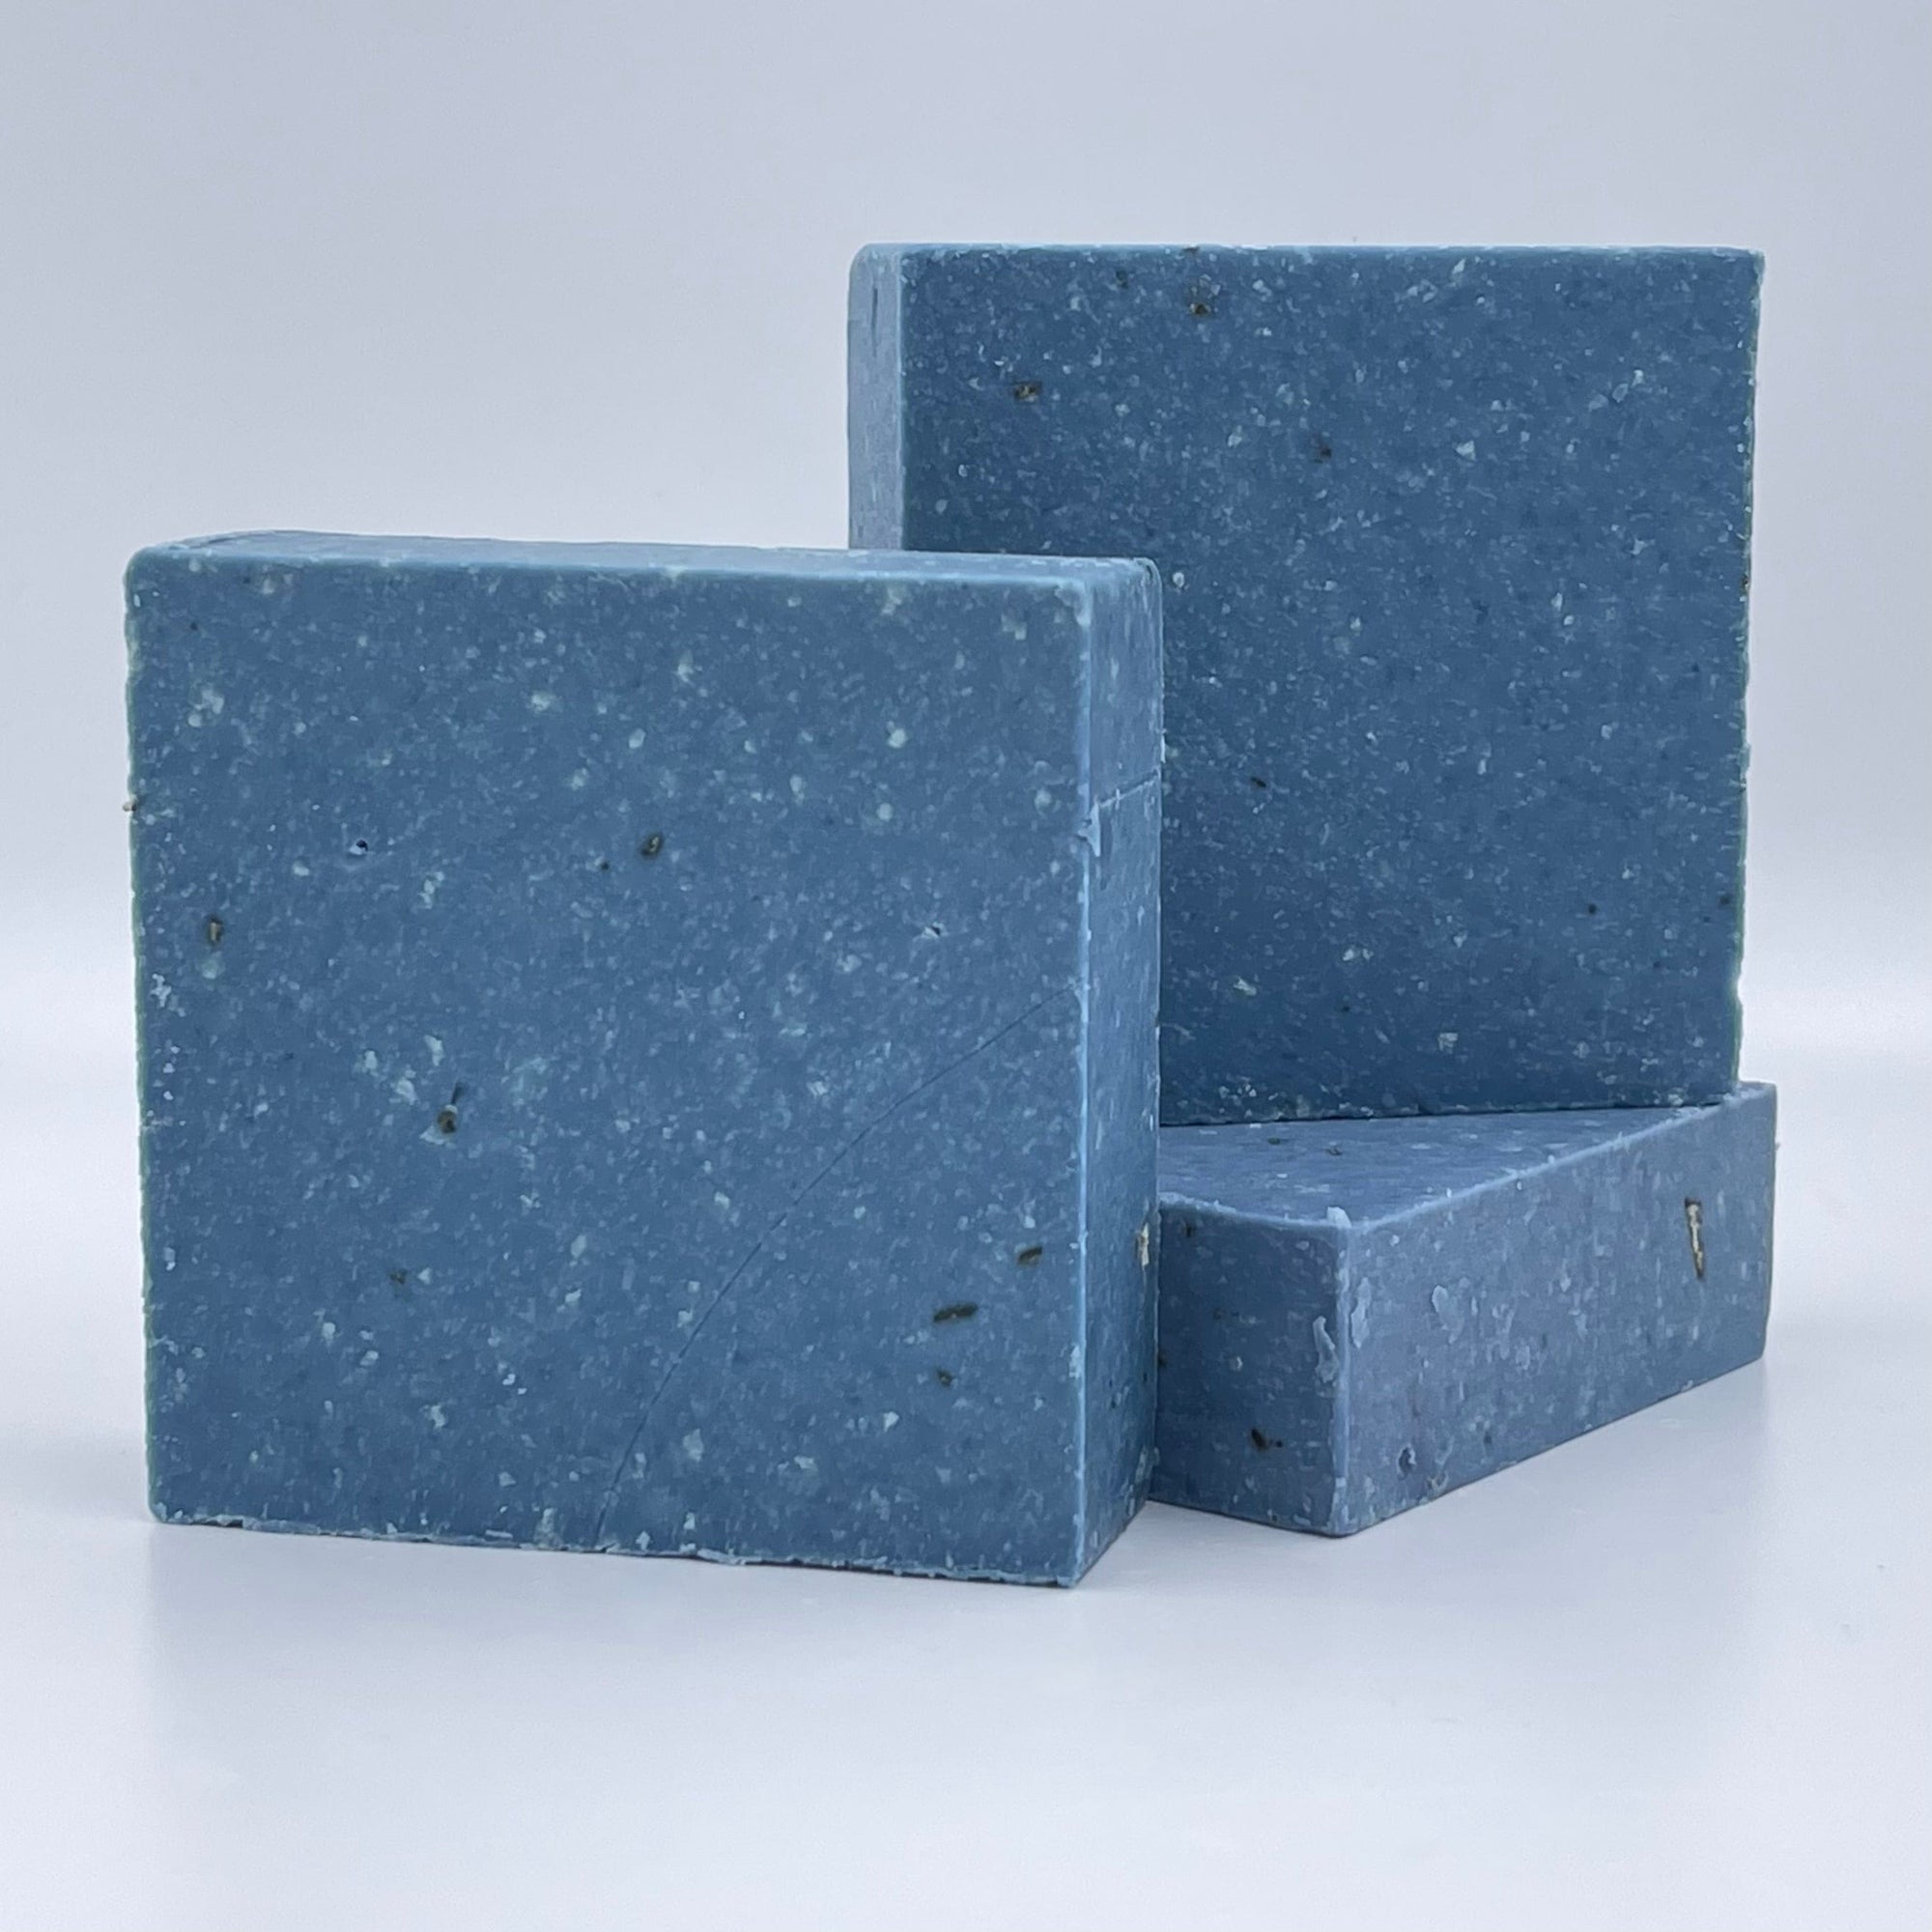 Blueberry Scrub Soap